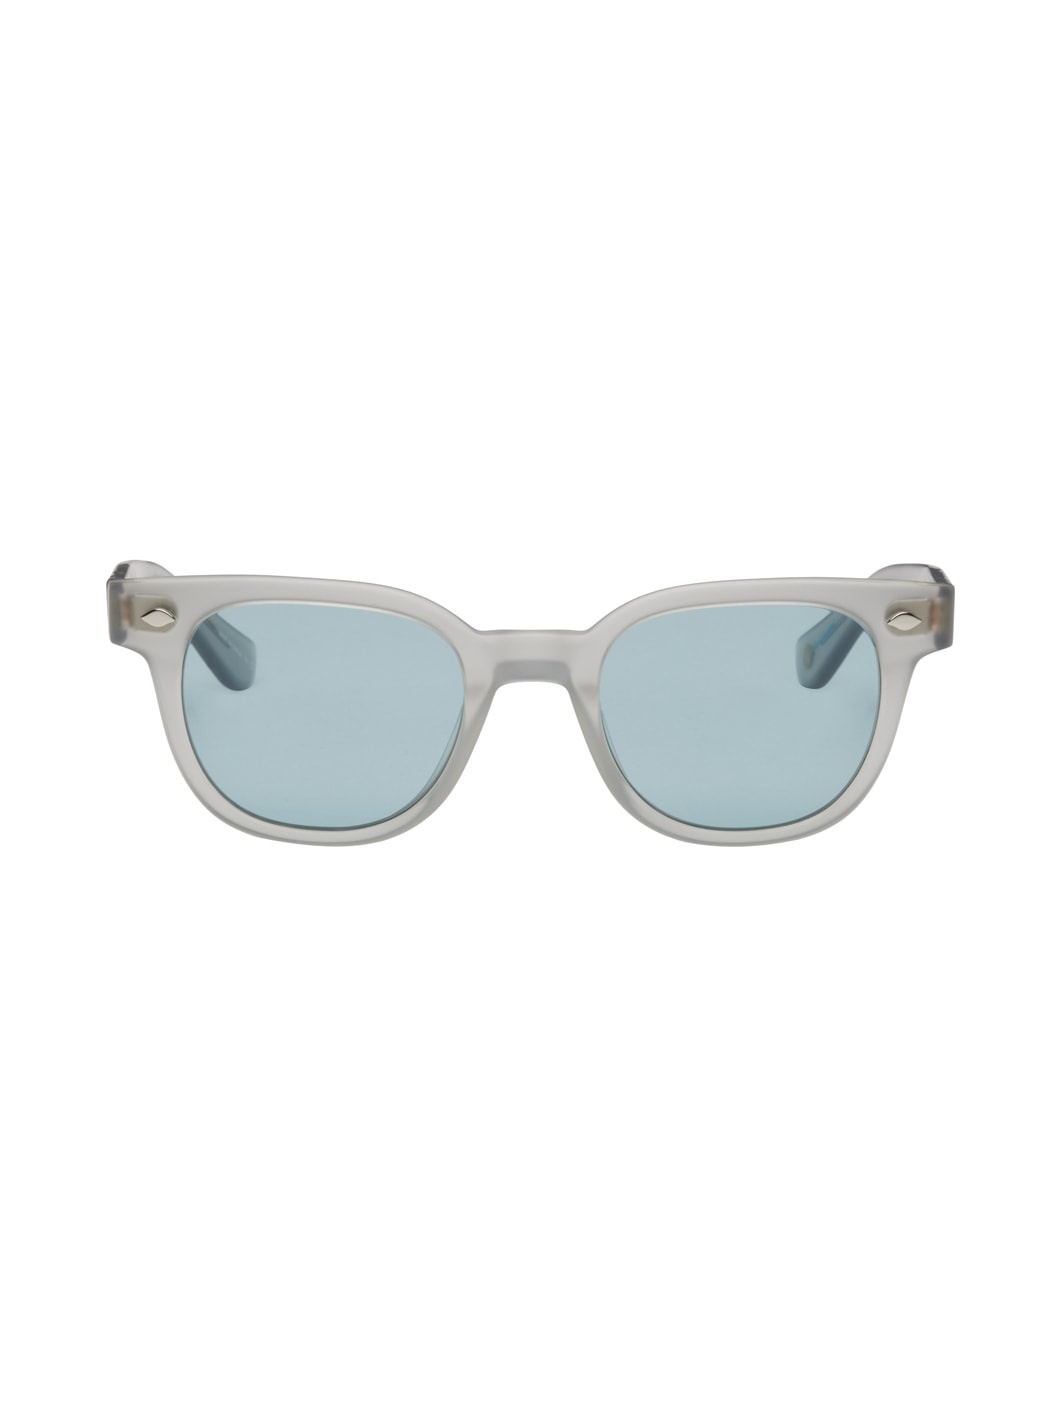 Gray Canter Sunglasses - 1